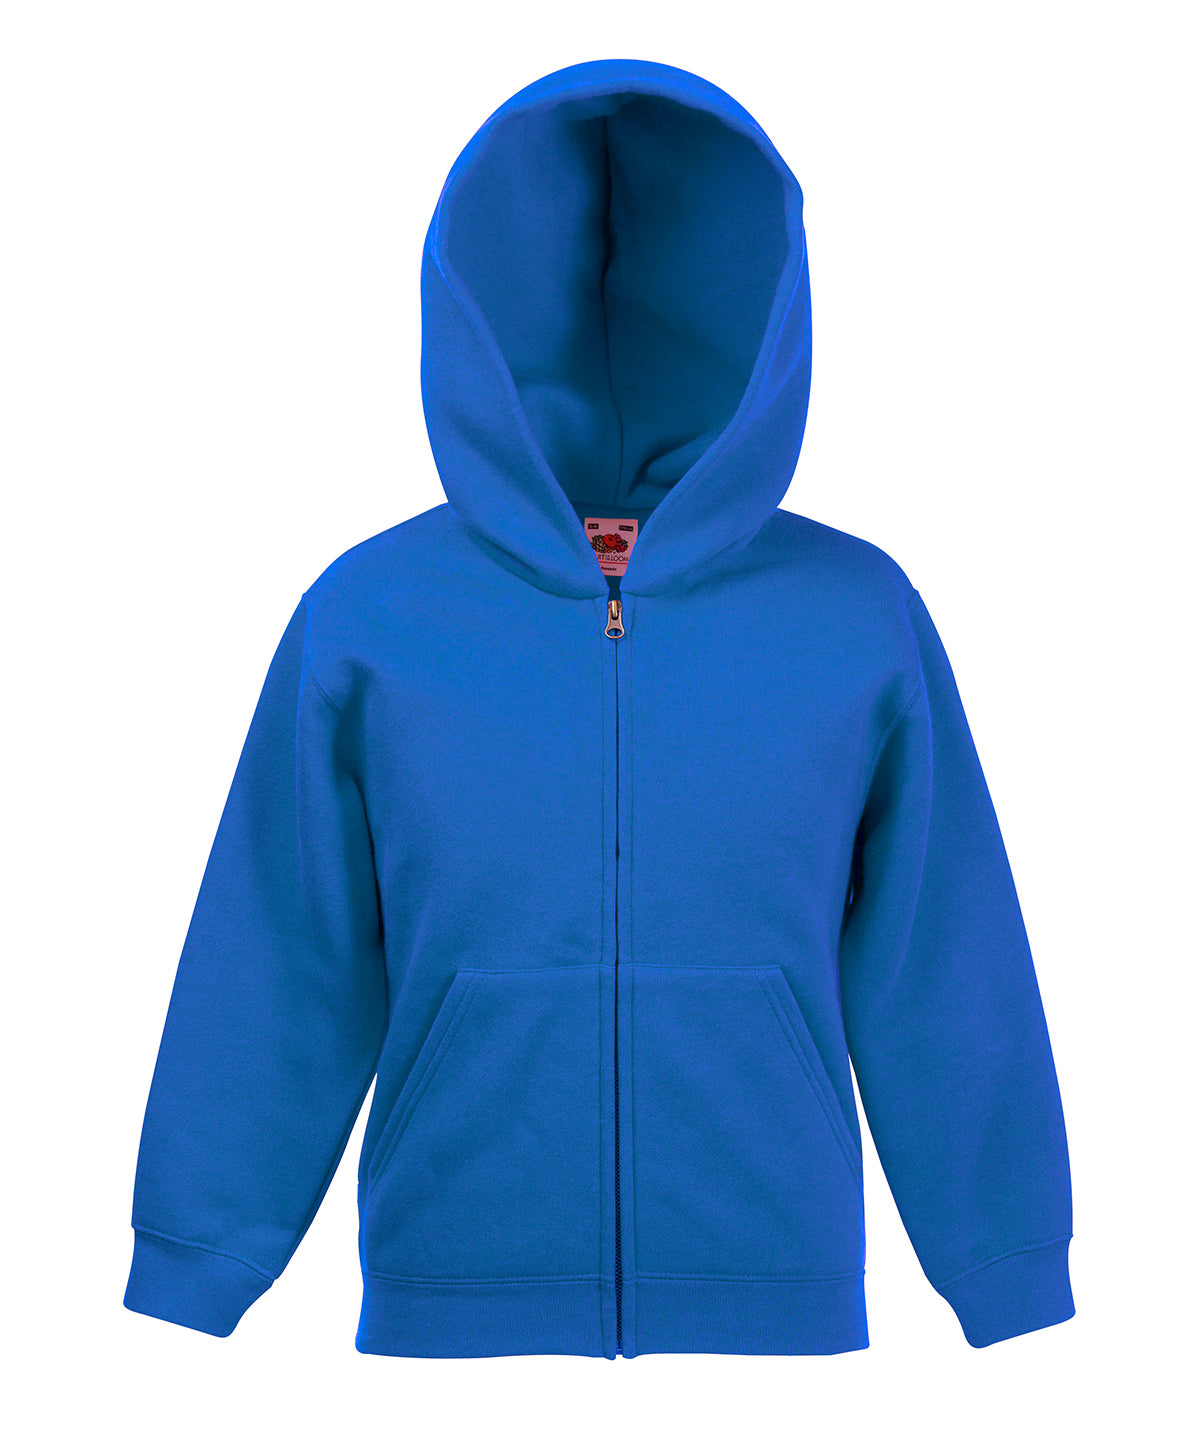 Hettupeysur - Kids Premium Hooded Sweatshirt Jacket